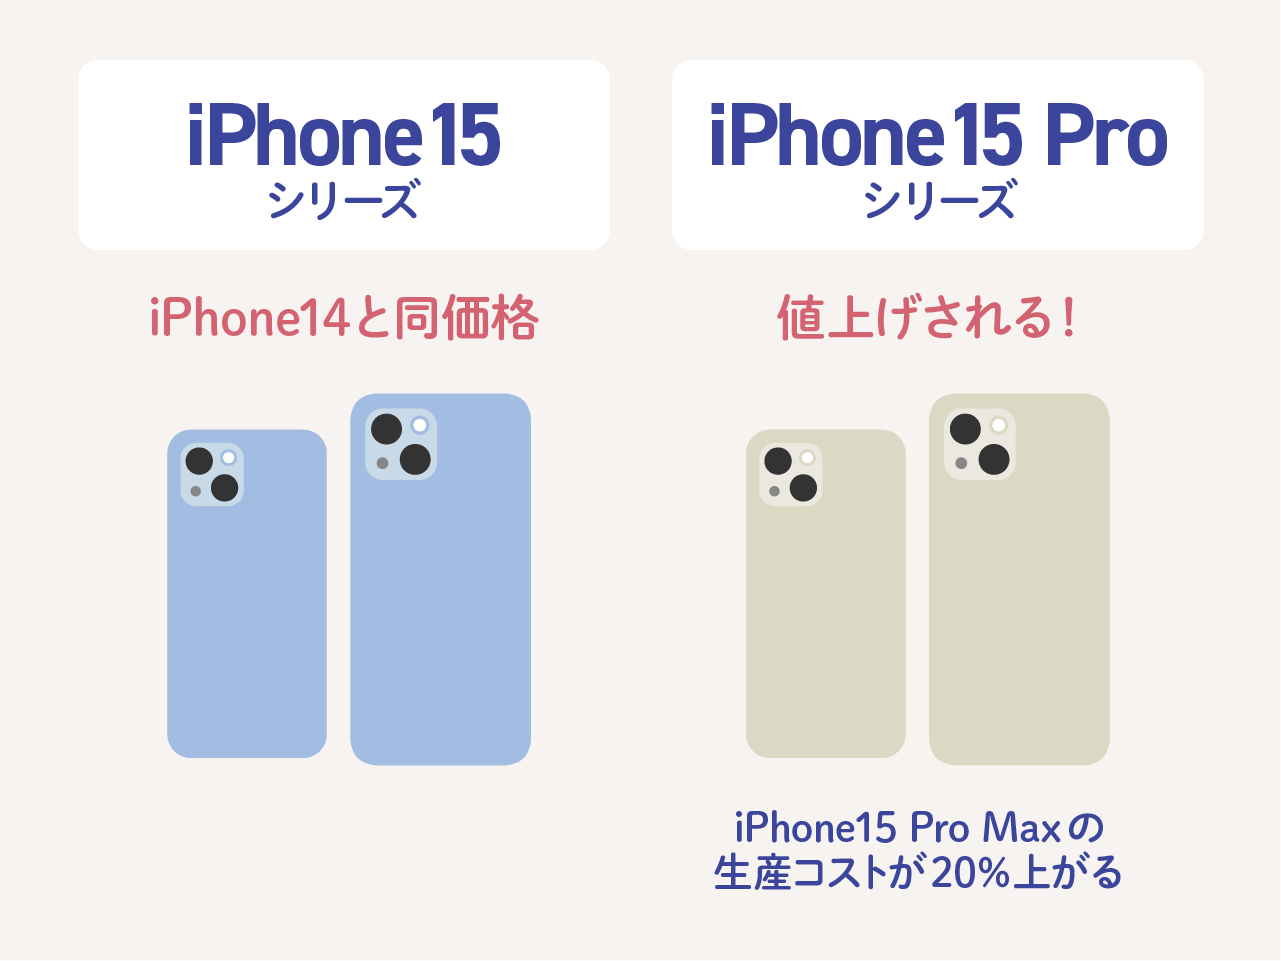 iPhone 15の価格・値段